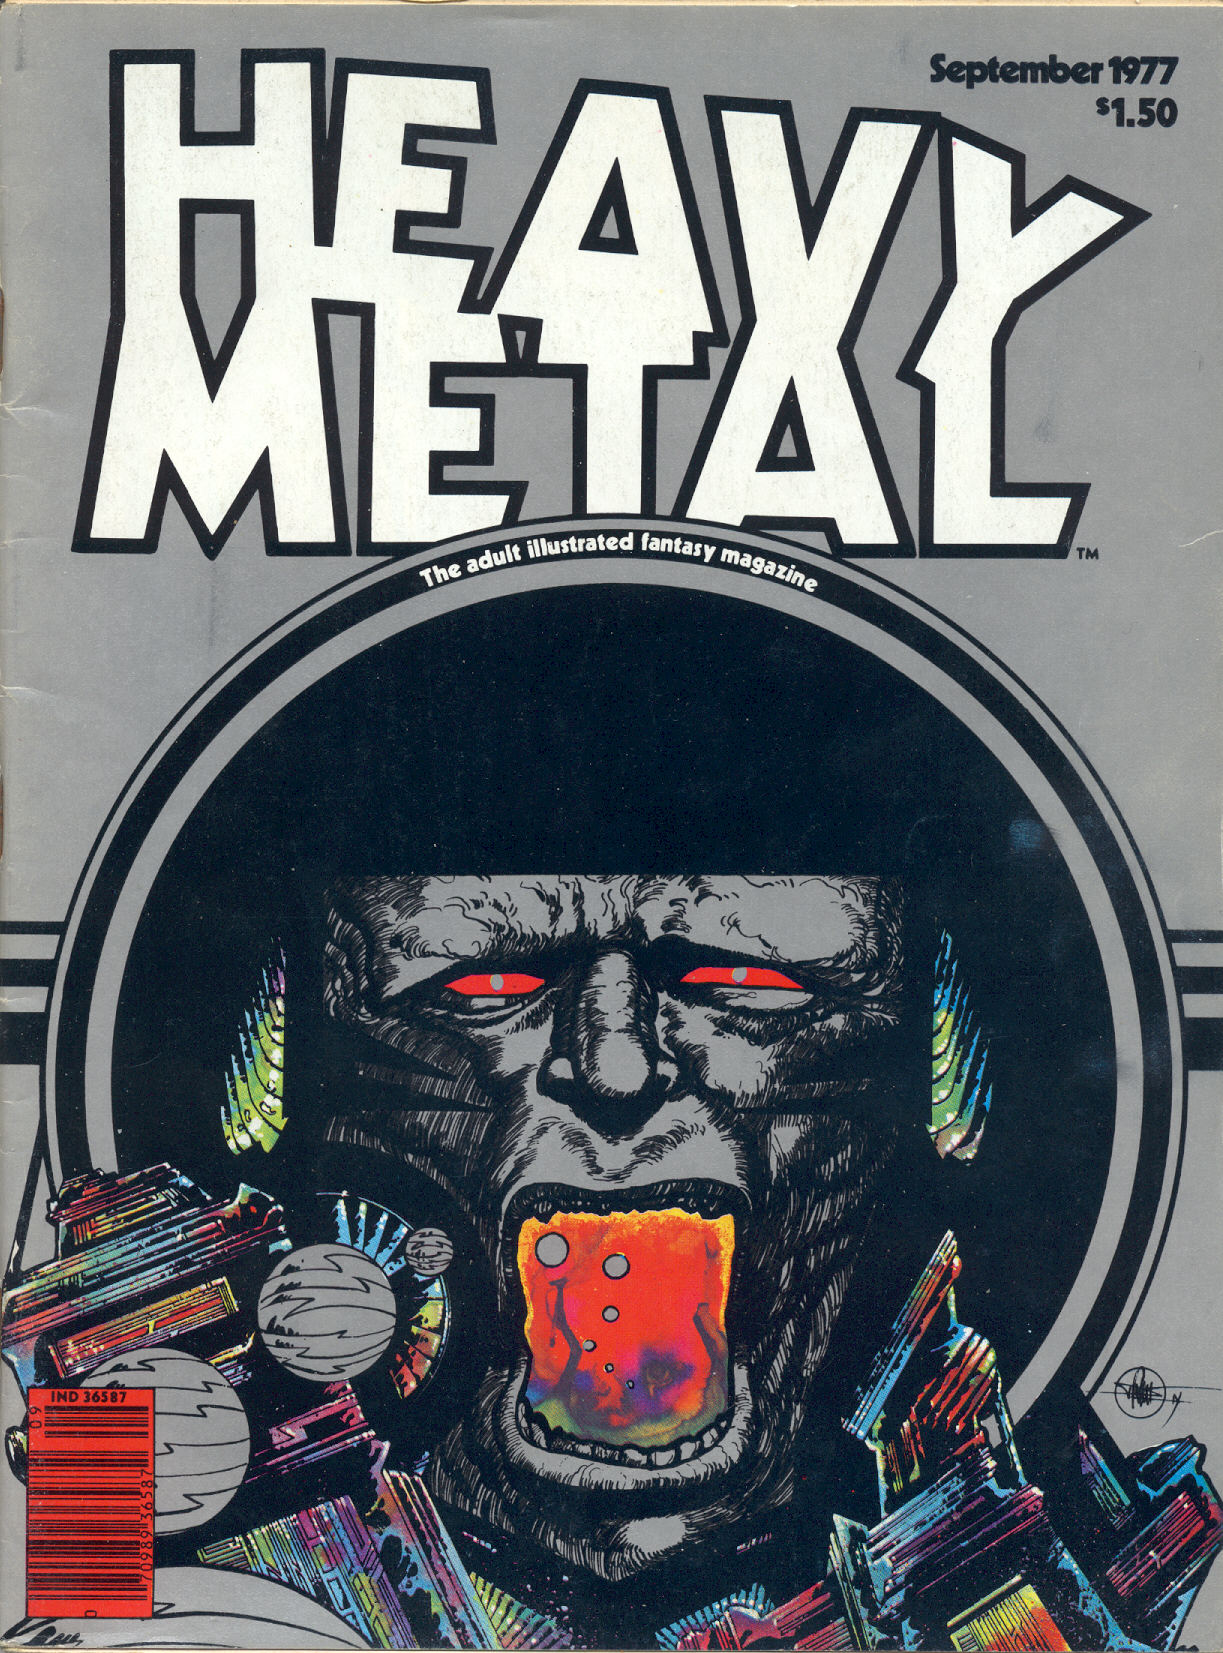 Fantastic Artwork of Heavy Metal Magazine